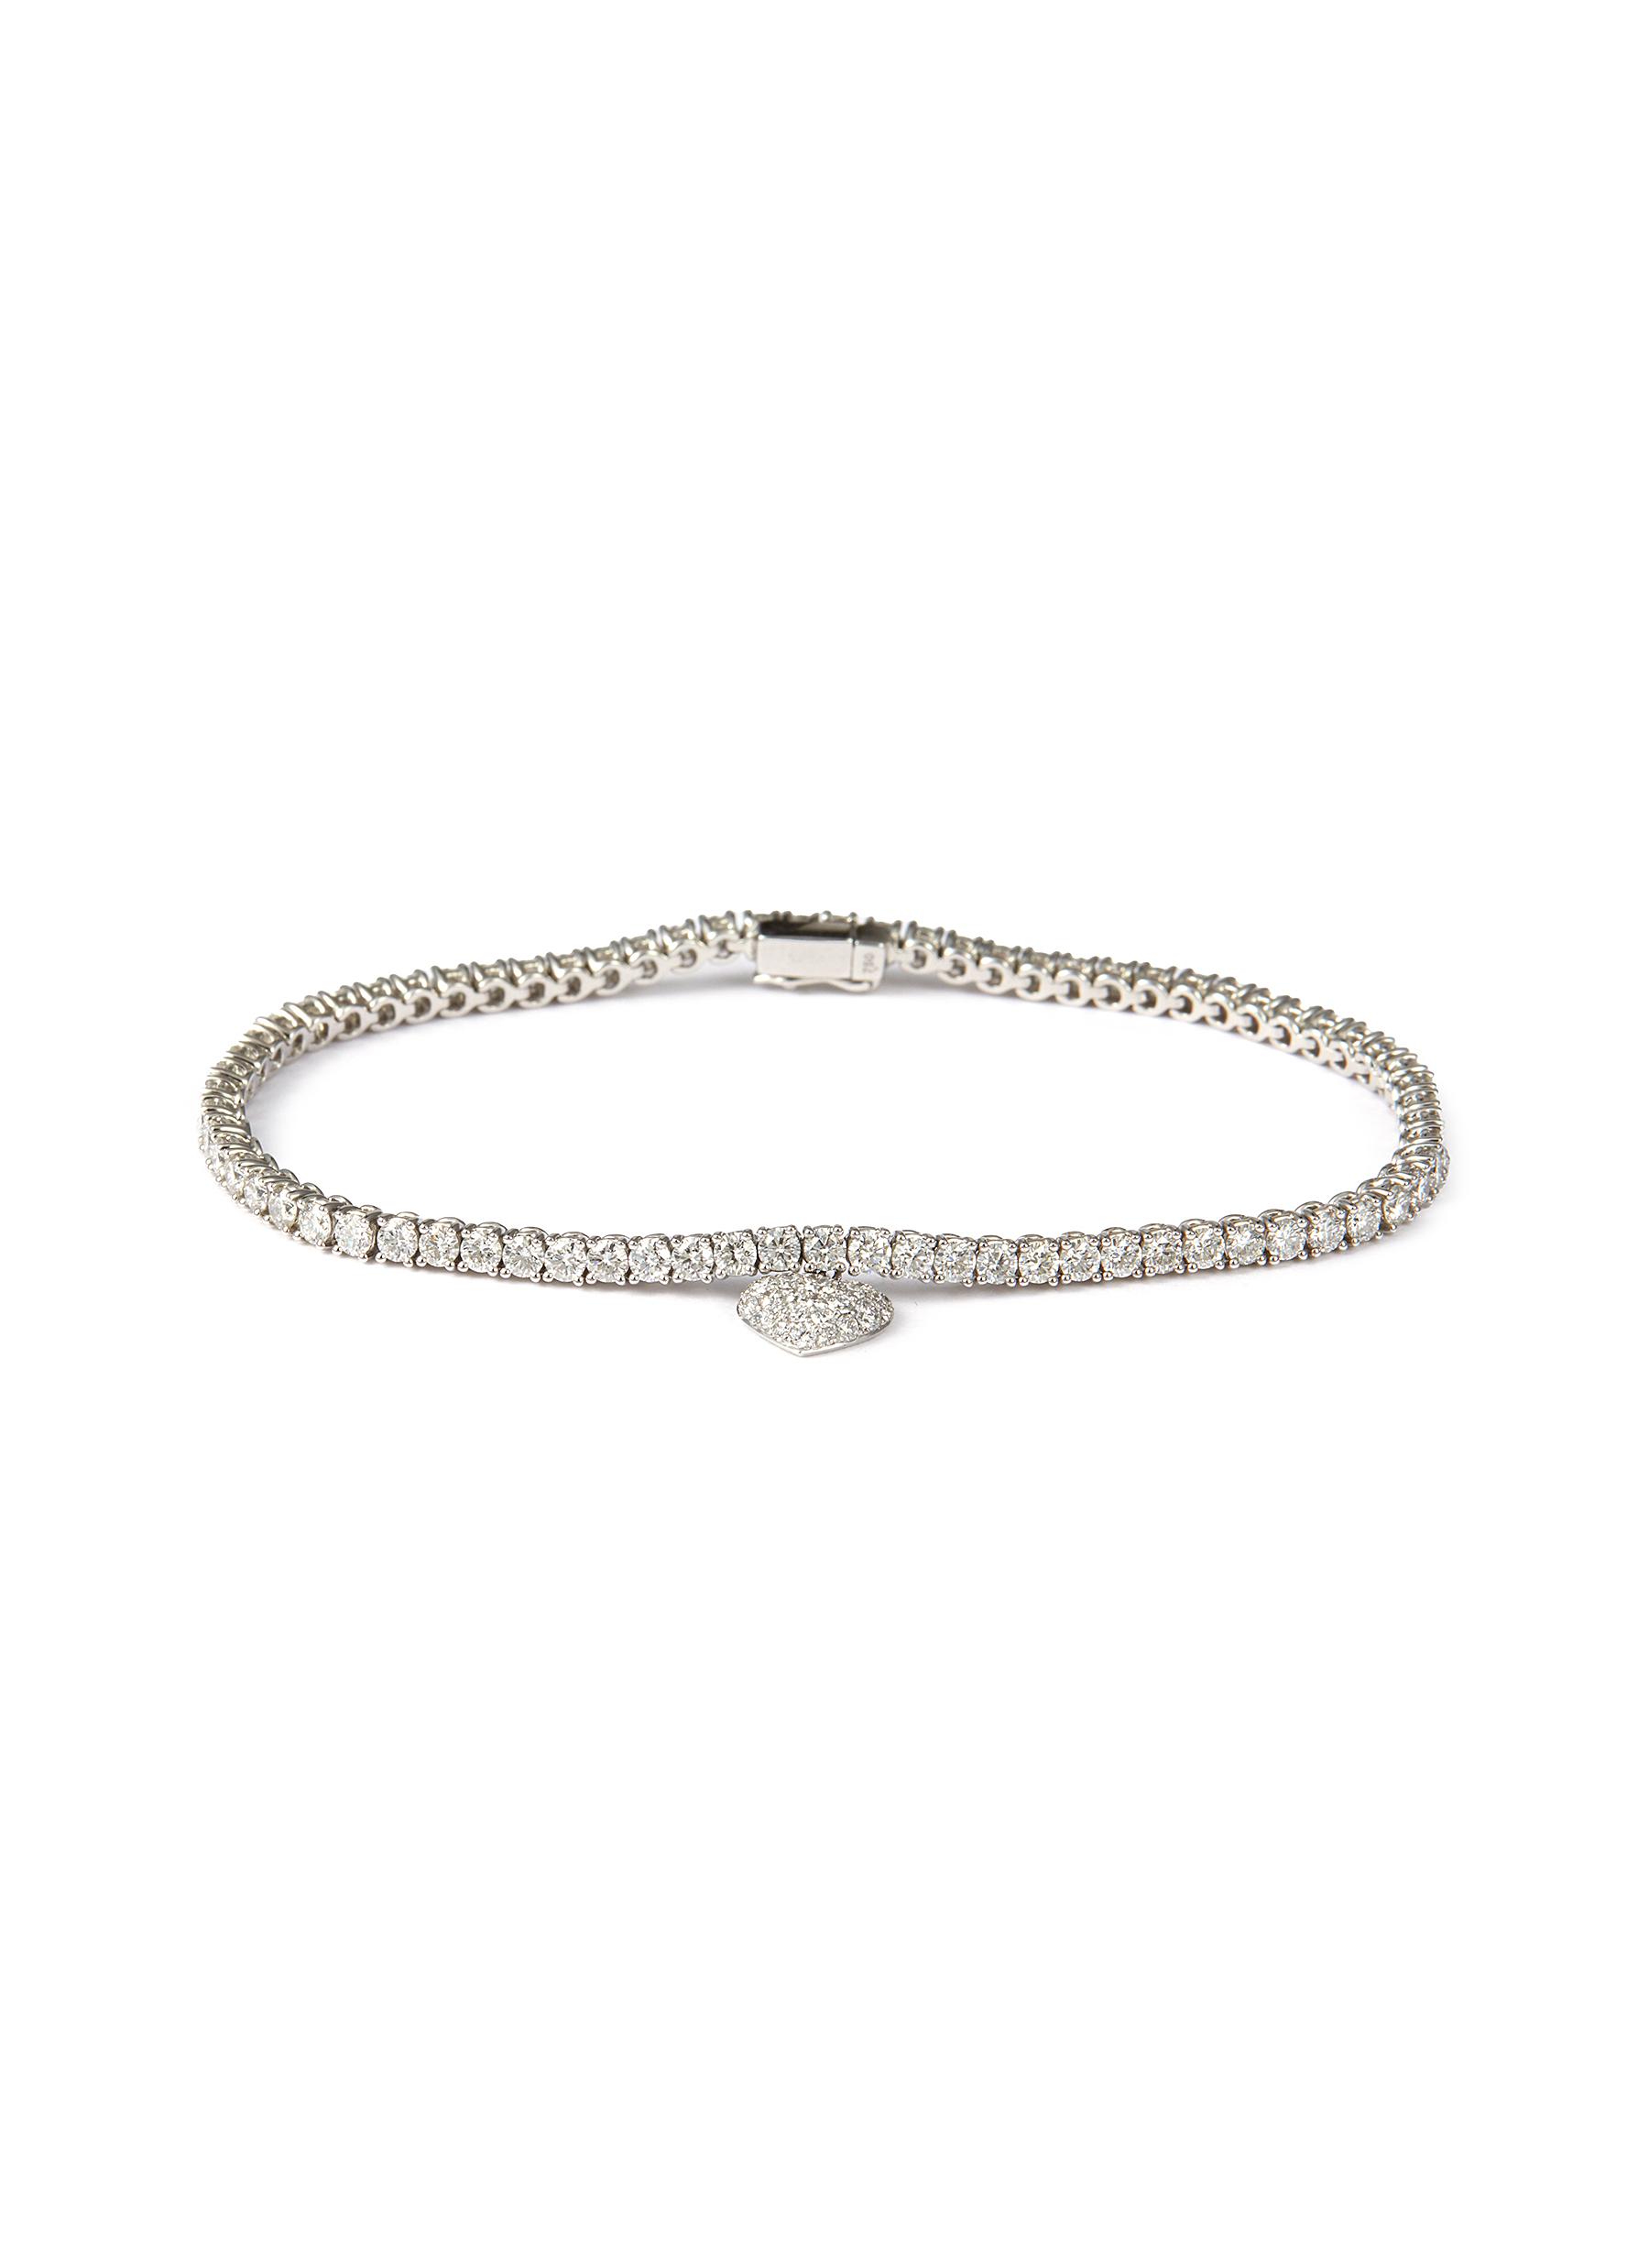 Women's Diamond Bracelets | Natural Diamond Bracelet London, UK